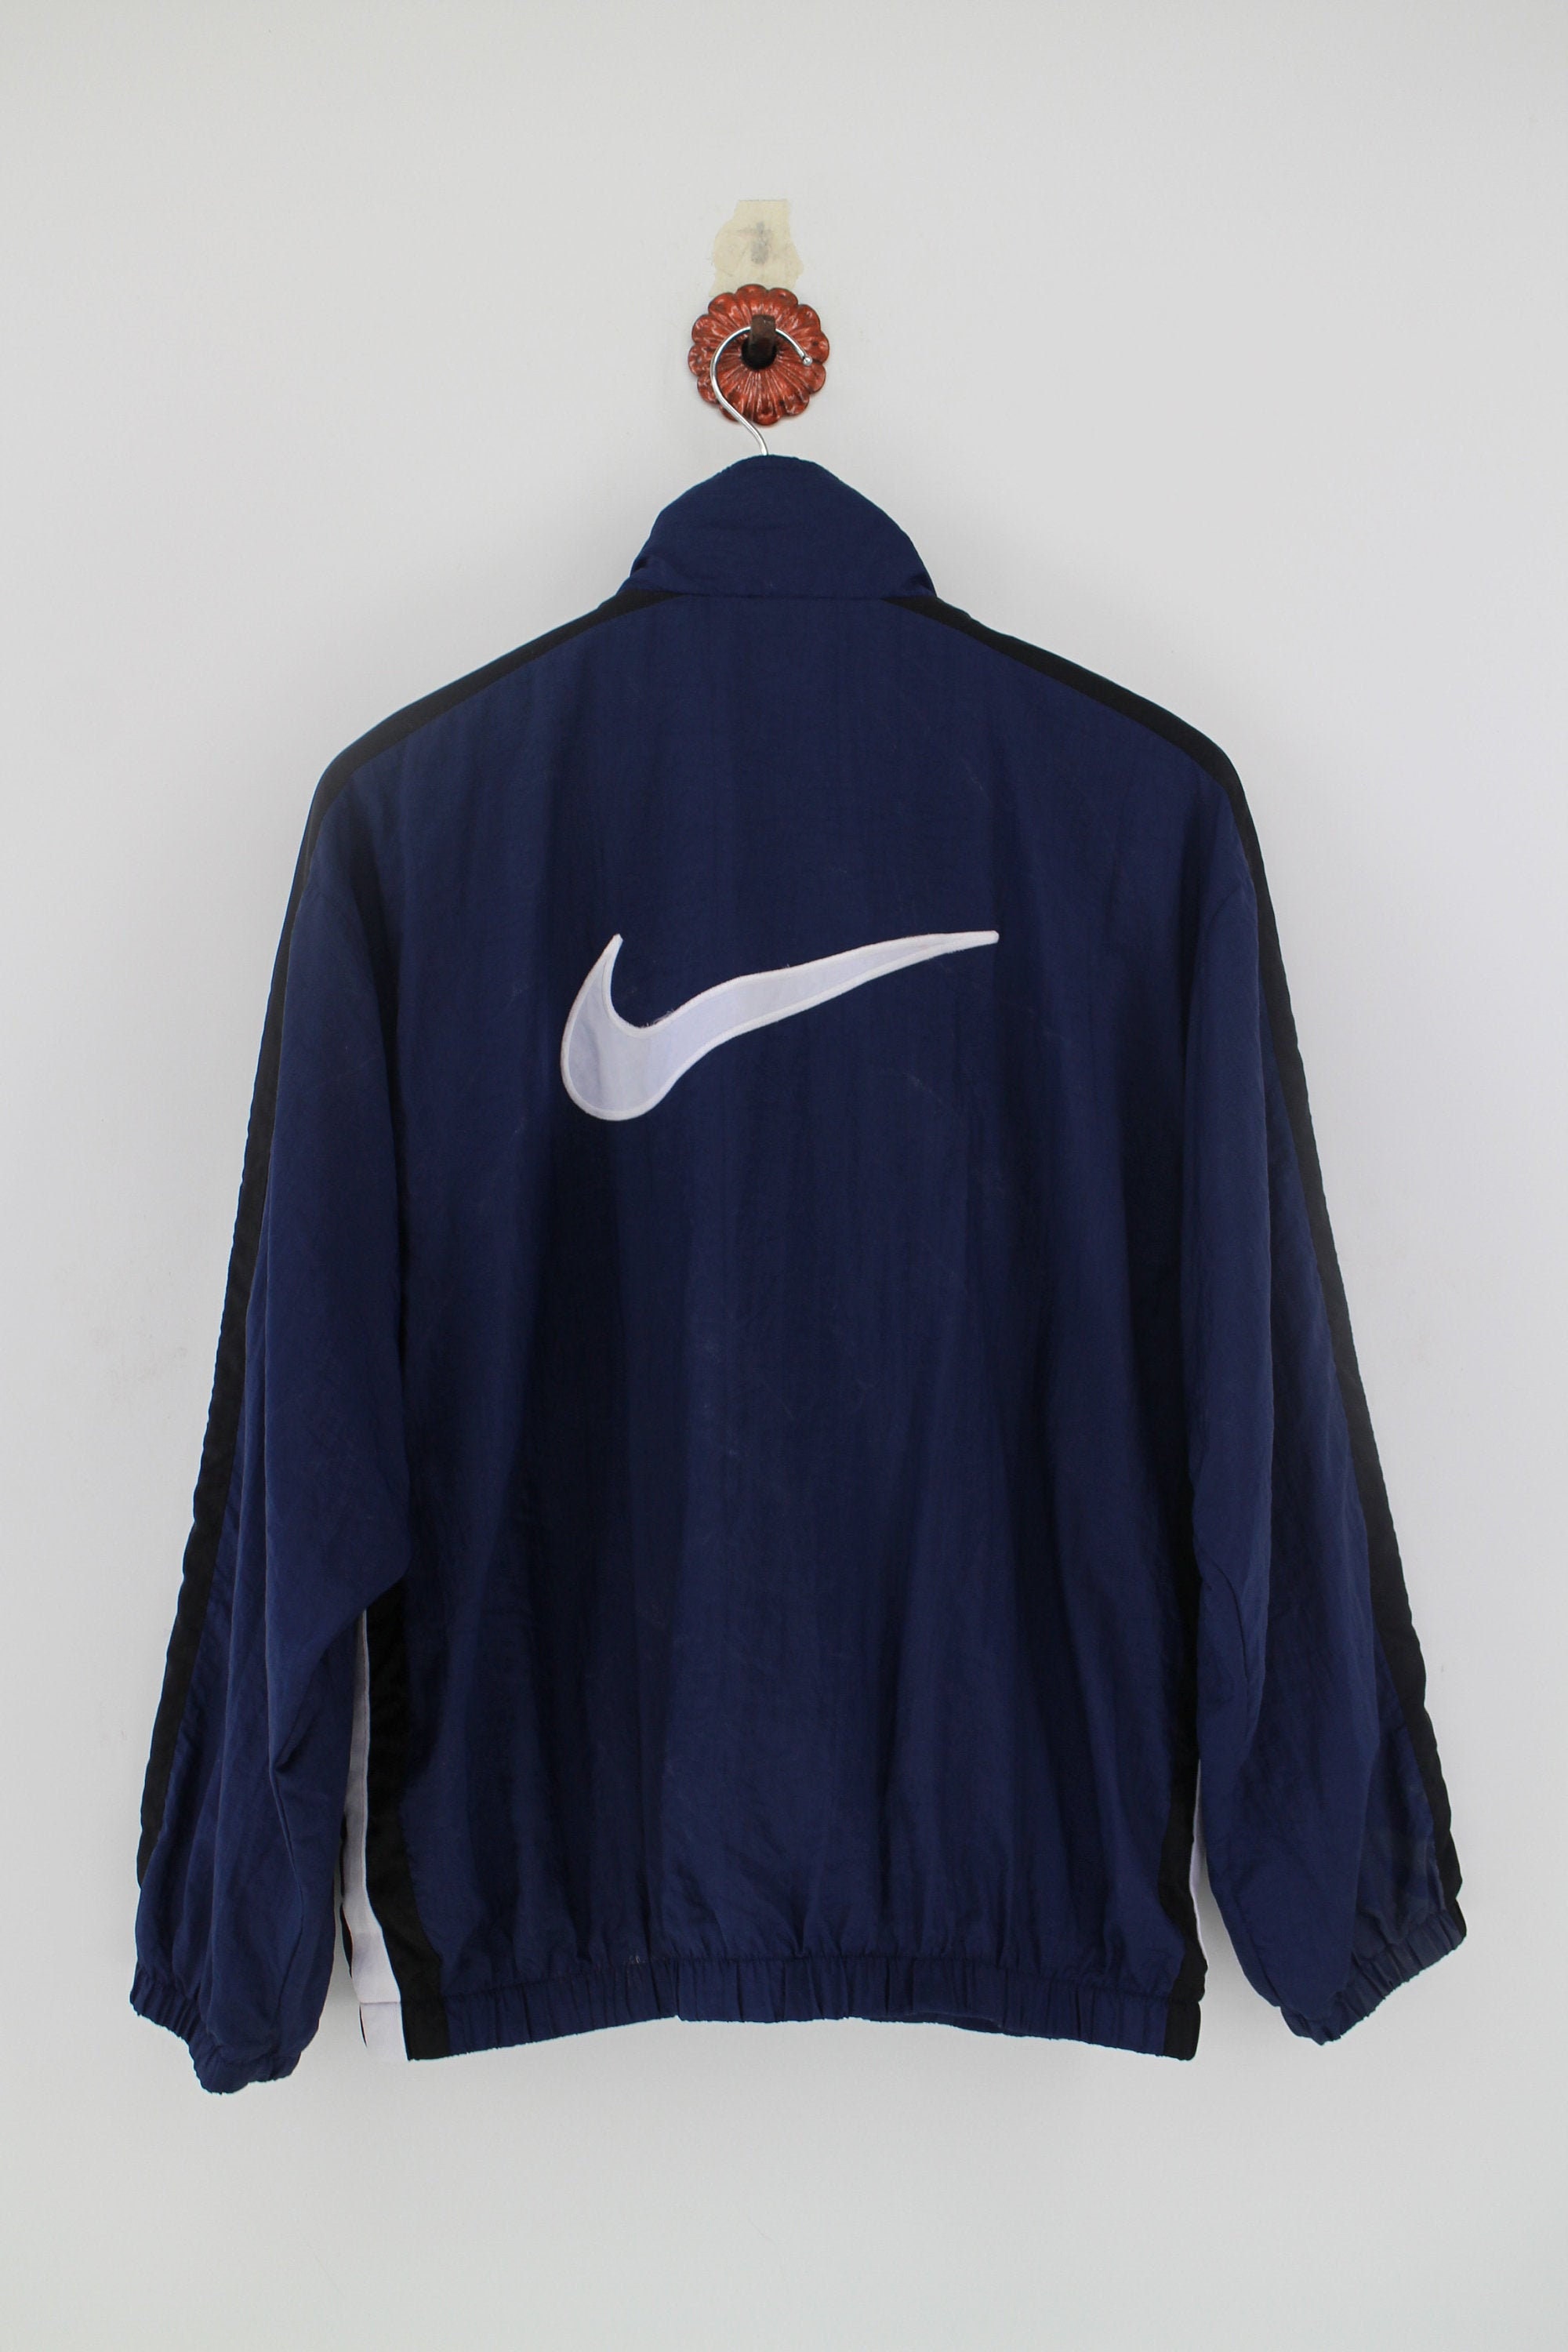 Vintage 90s NIKE Swoosh Windbreaker Jacket Medium Nike Swoosh - Etsy UK